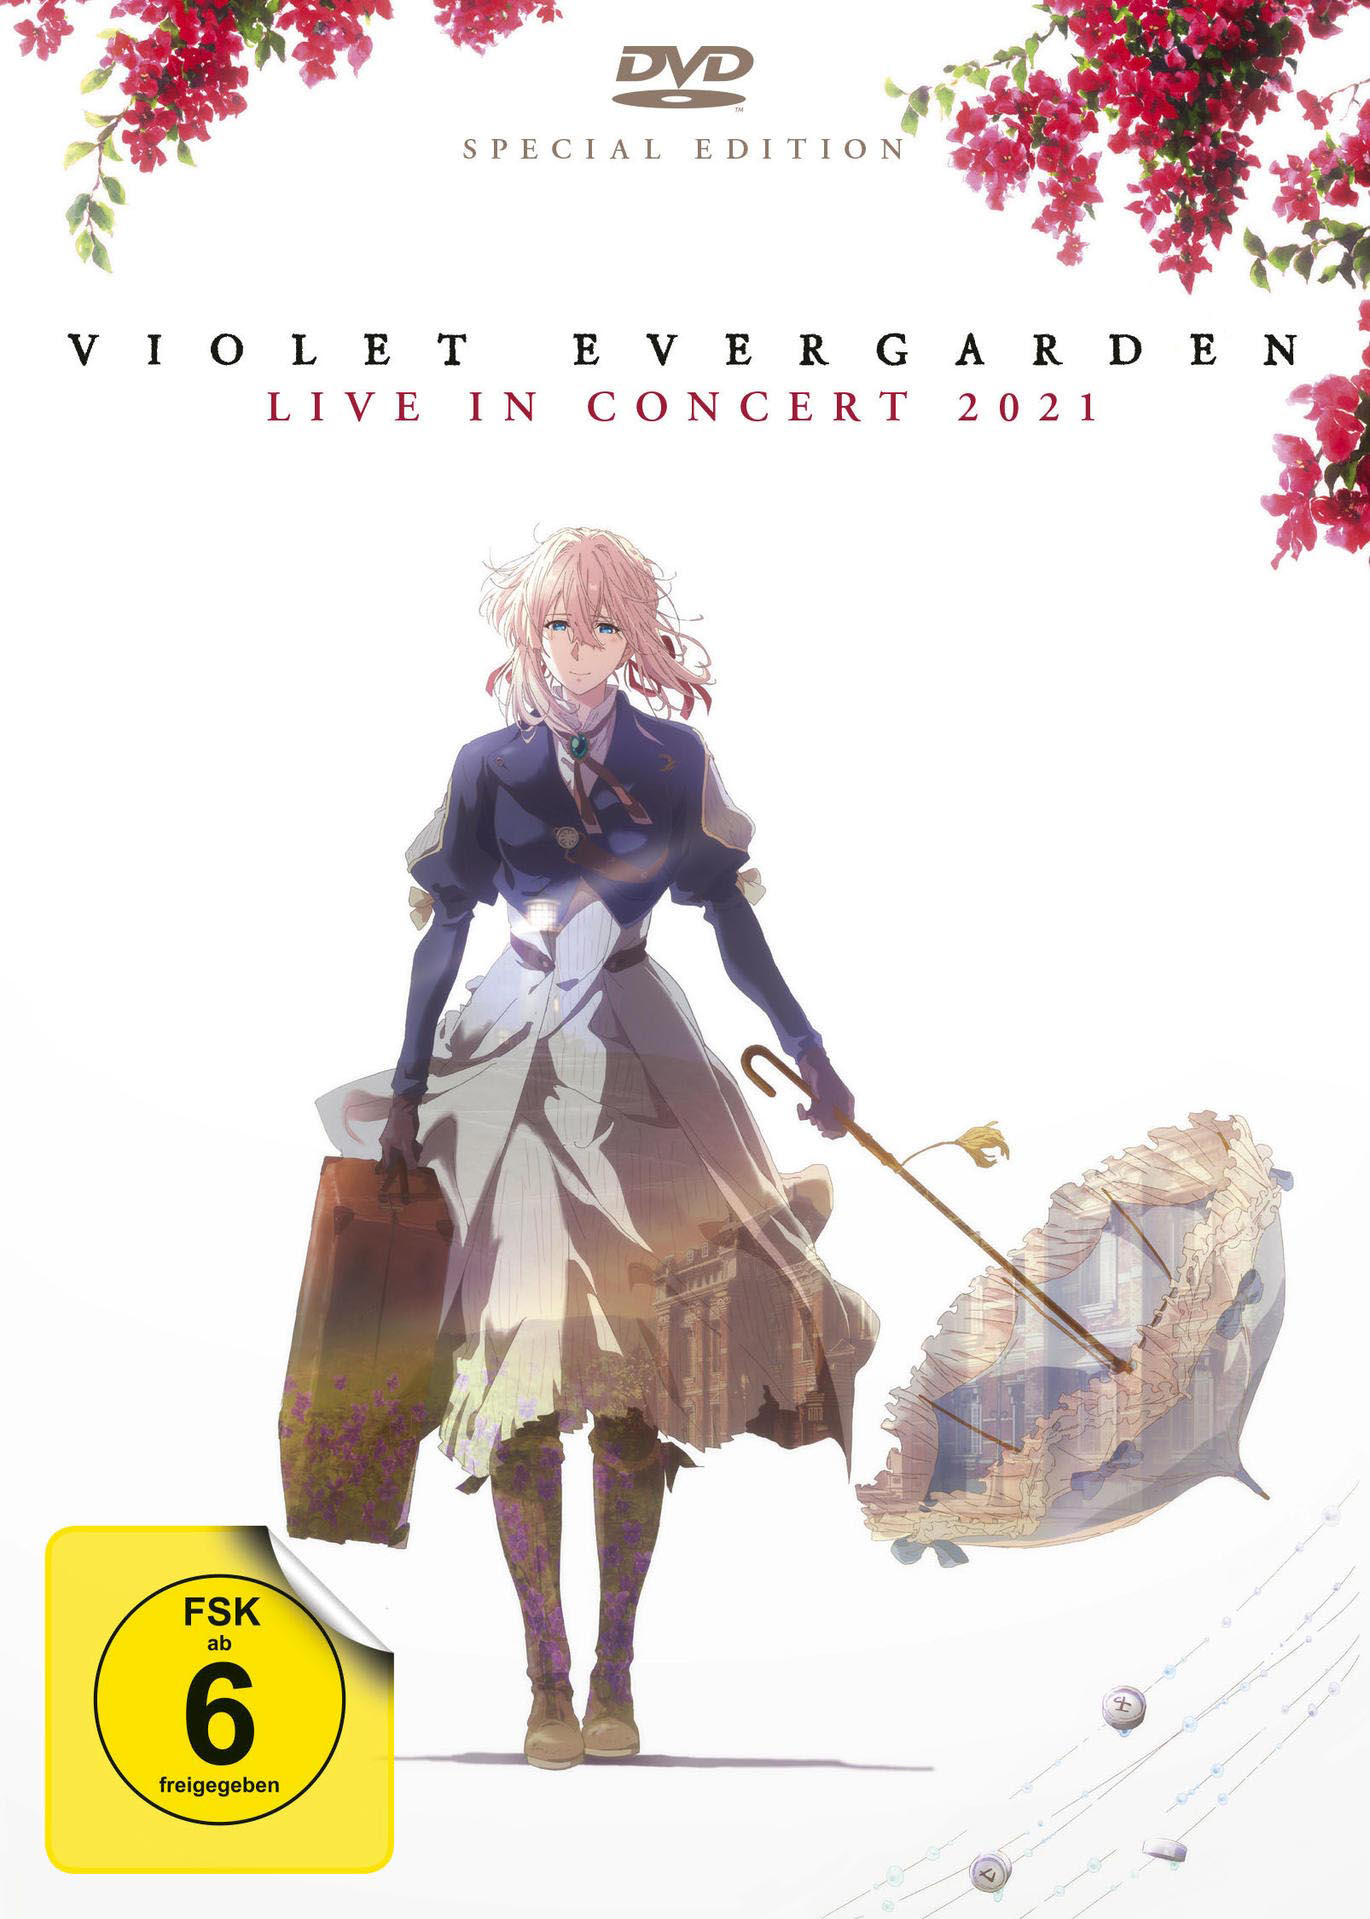 Live Violet DVD Concert - Evergarden in 2021